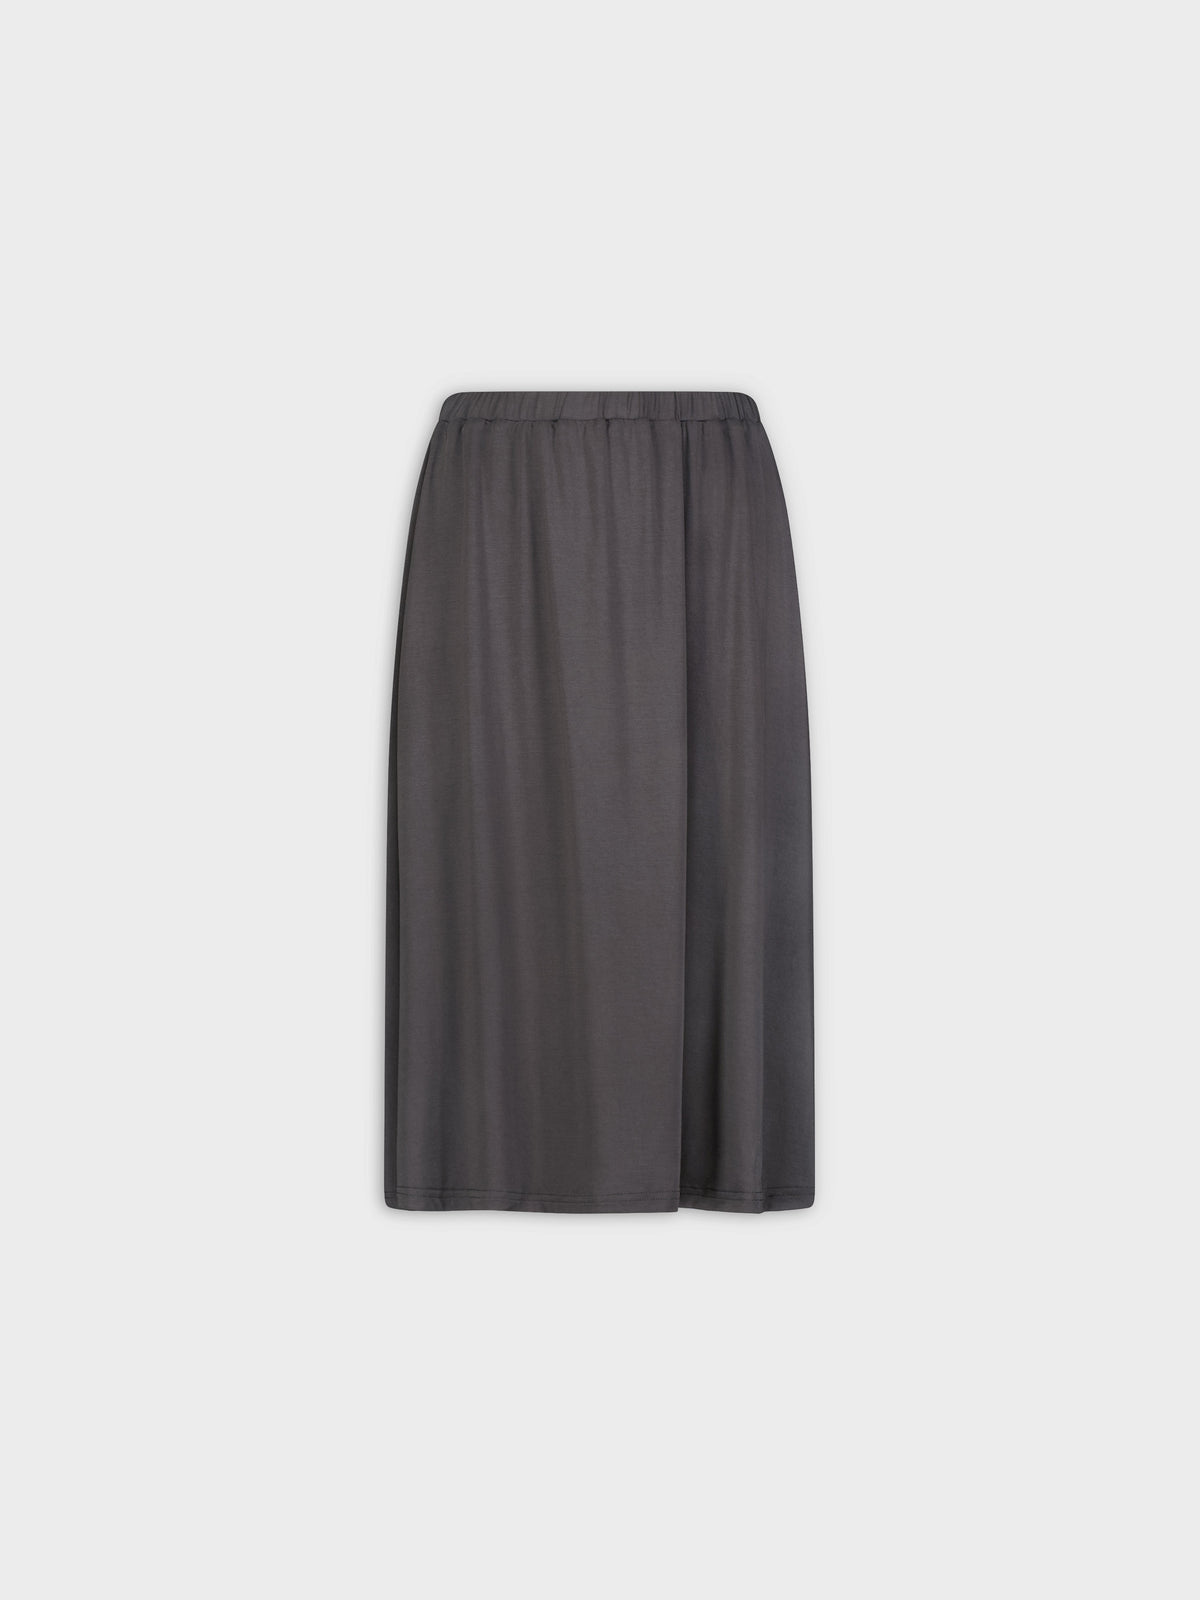 Circle Skirt 26"-Charcoal Grey